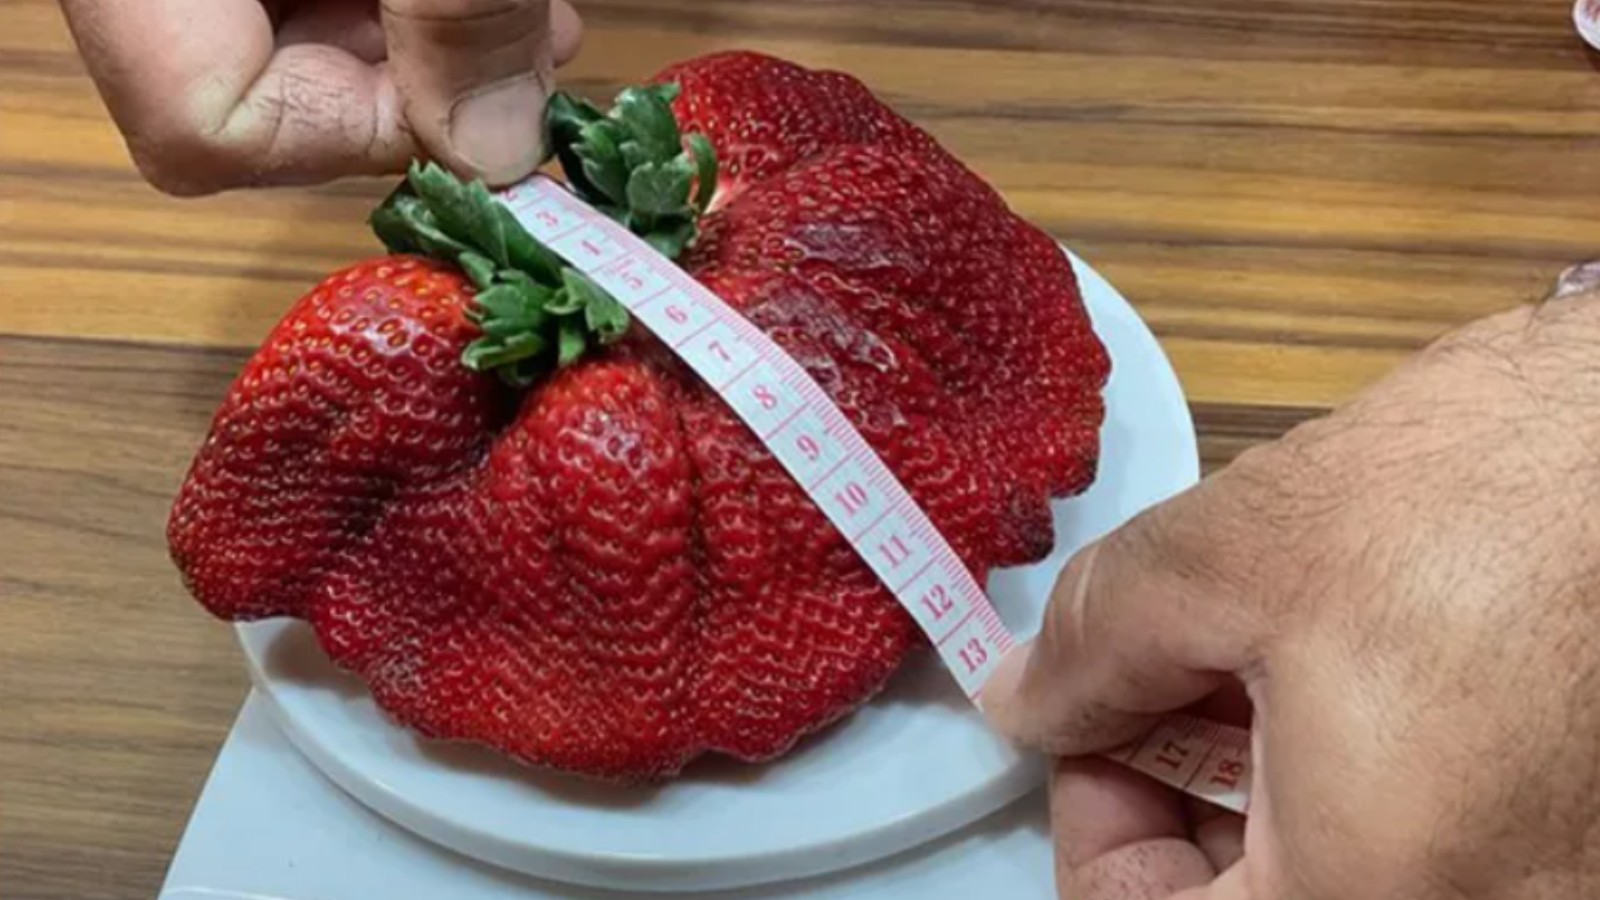 Guinness certifies world's heaviest strawberry in Israel ISRAEL21c